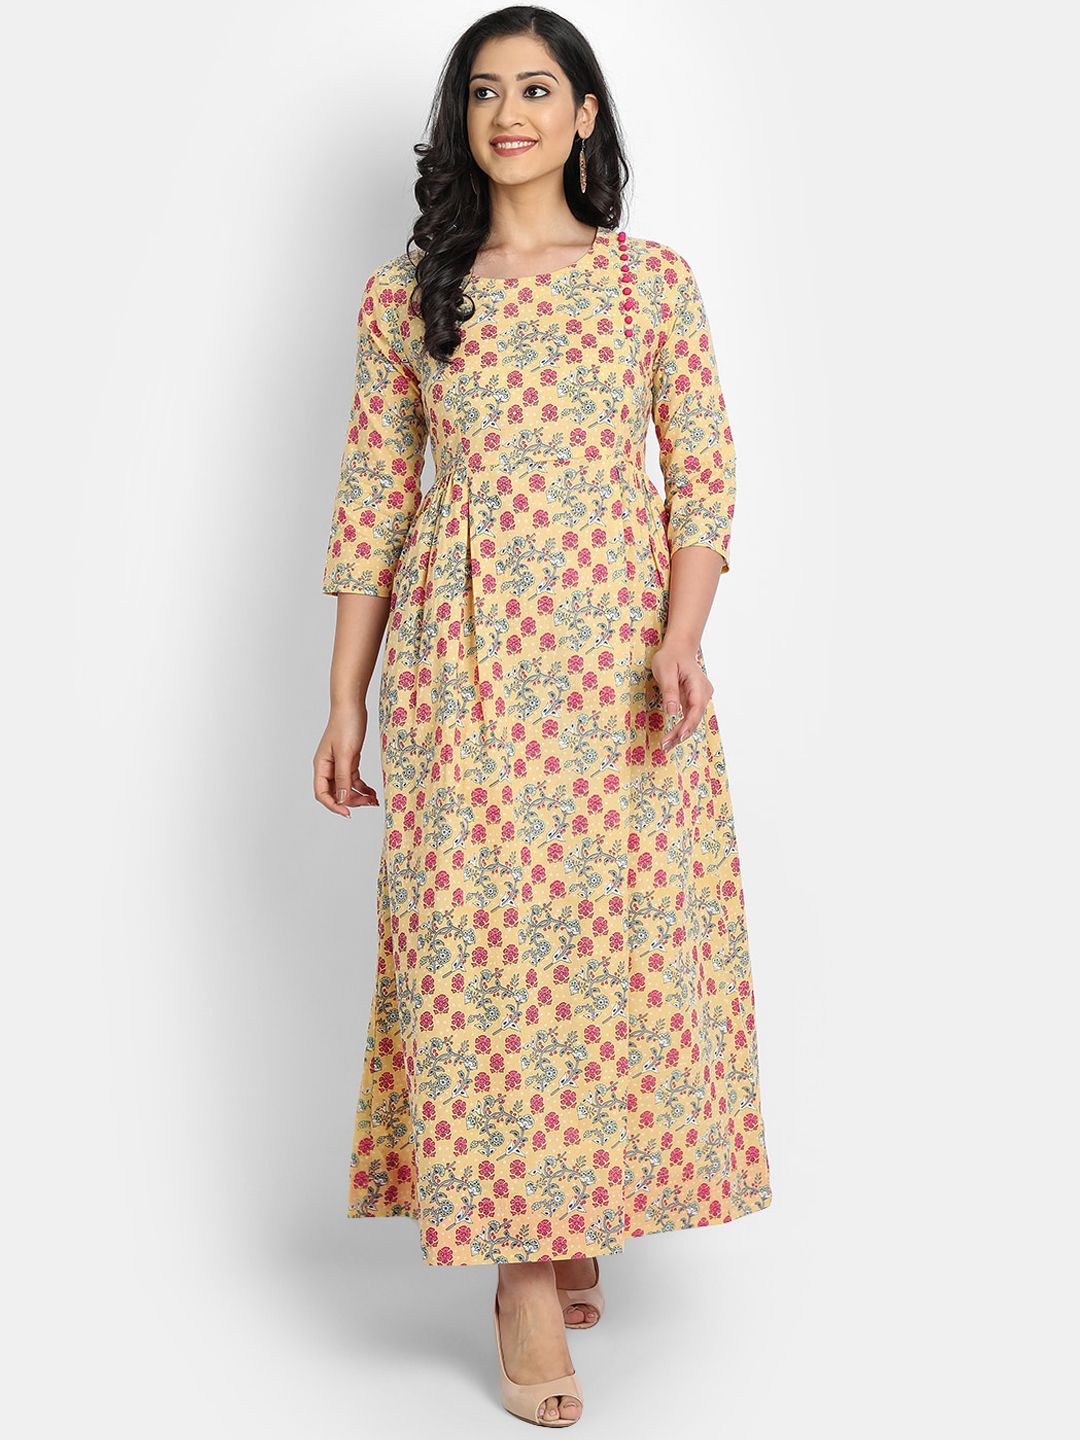 SUTI Yellow Floral Printed Maxi Dress Price in India